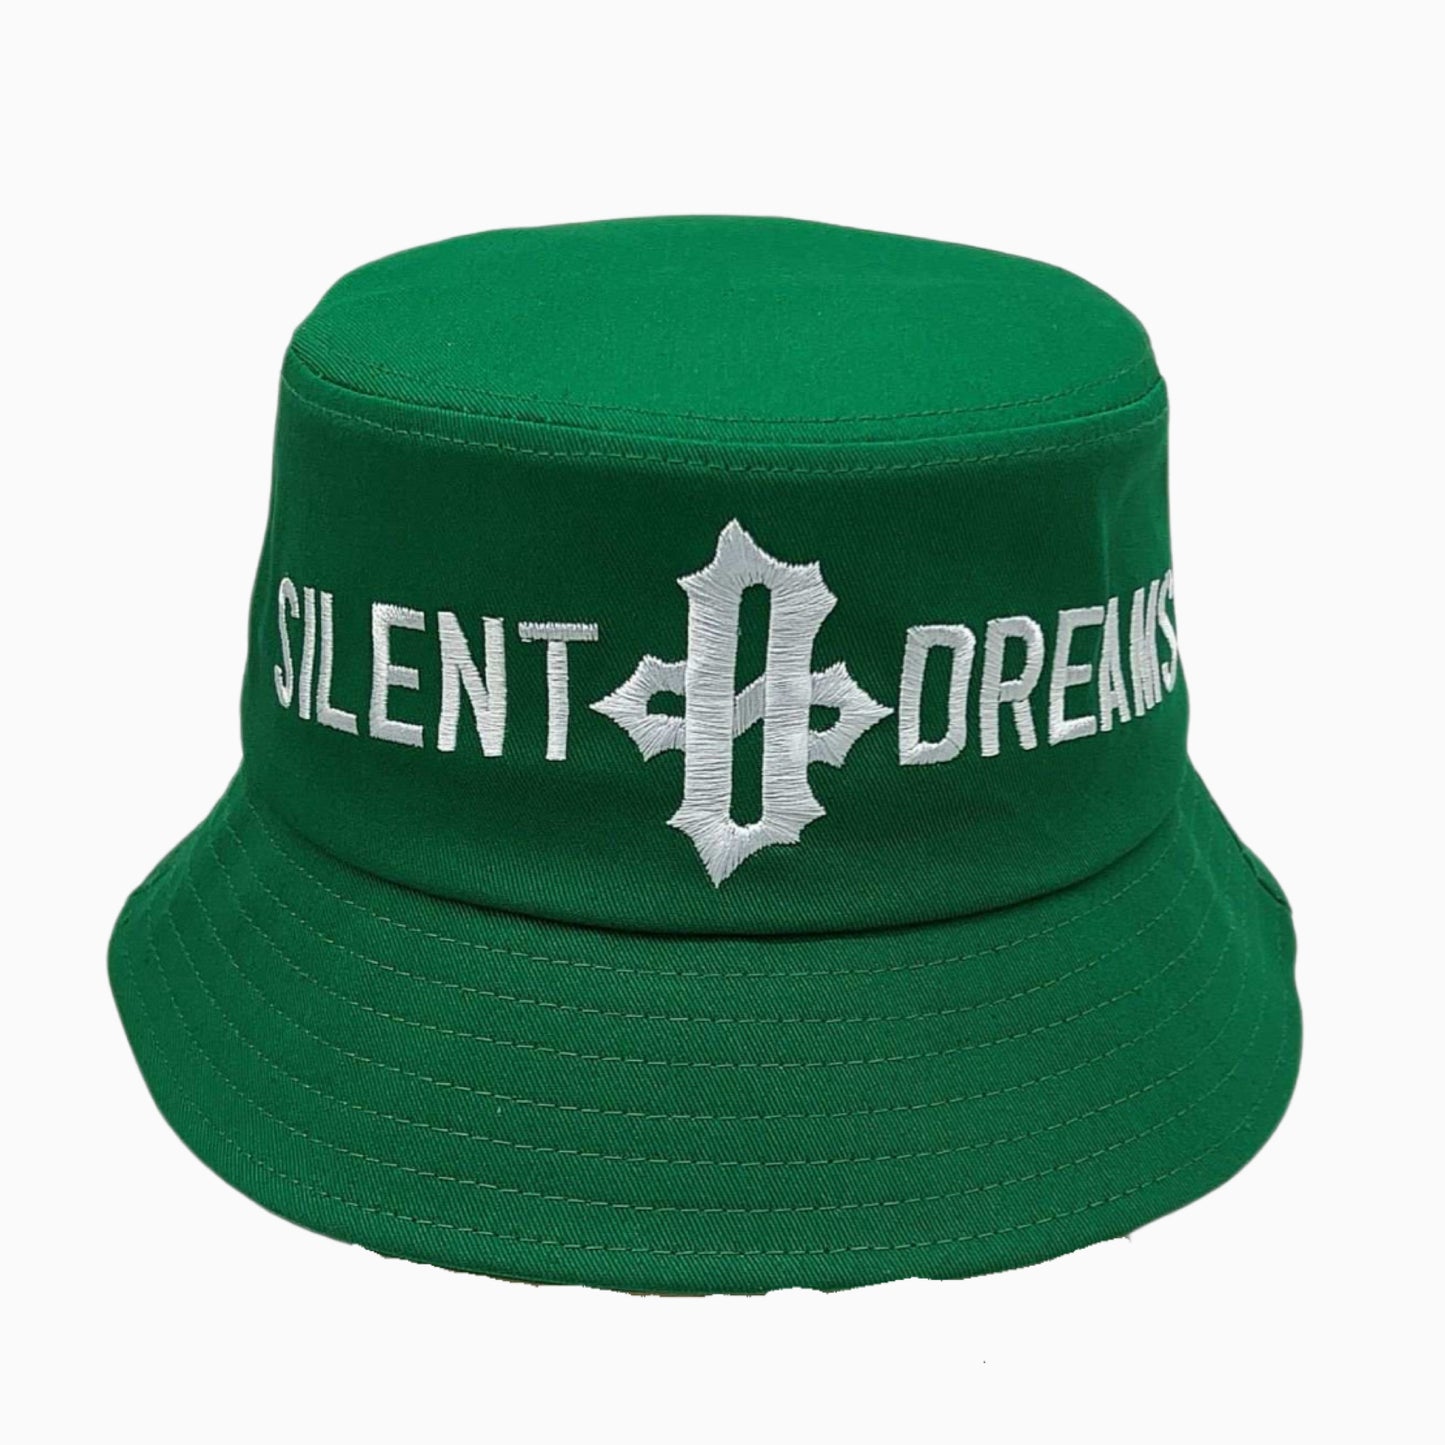 Silent Dreams Green Bucket Hat